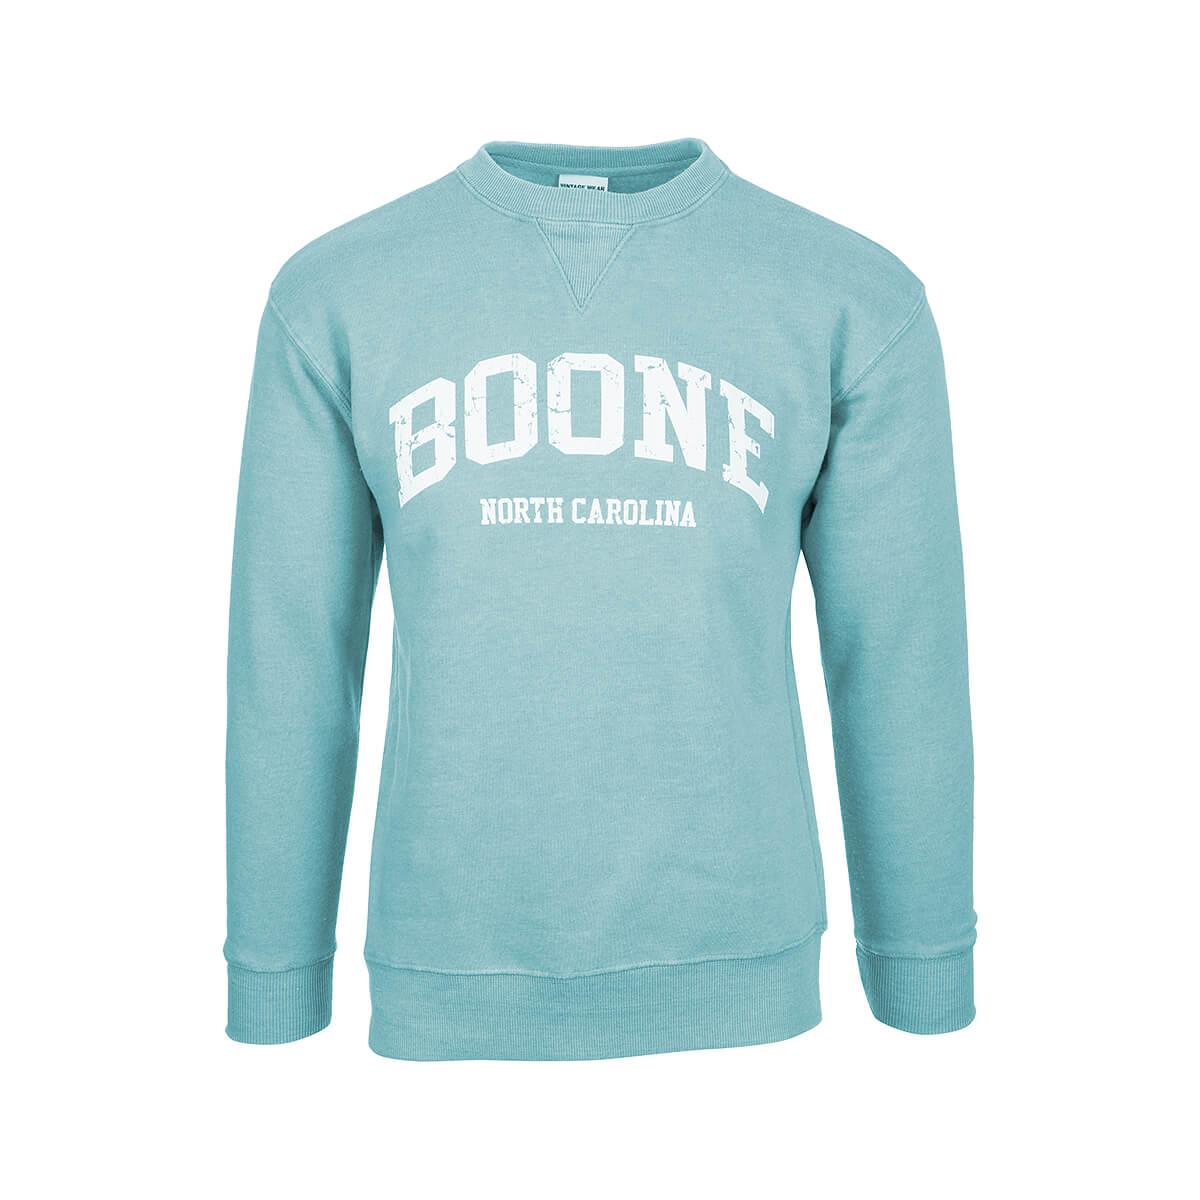  Mast General Store Boone Burn Wash Crew Sweatshirt